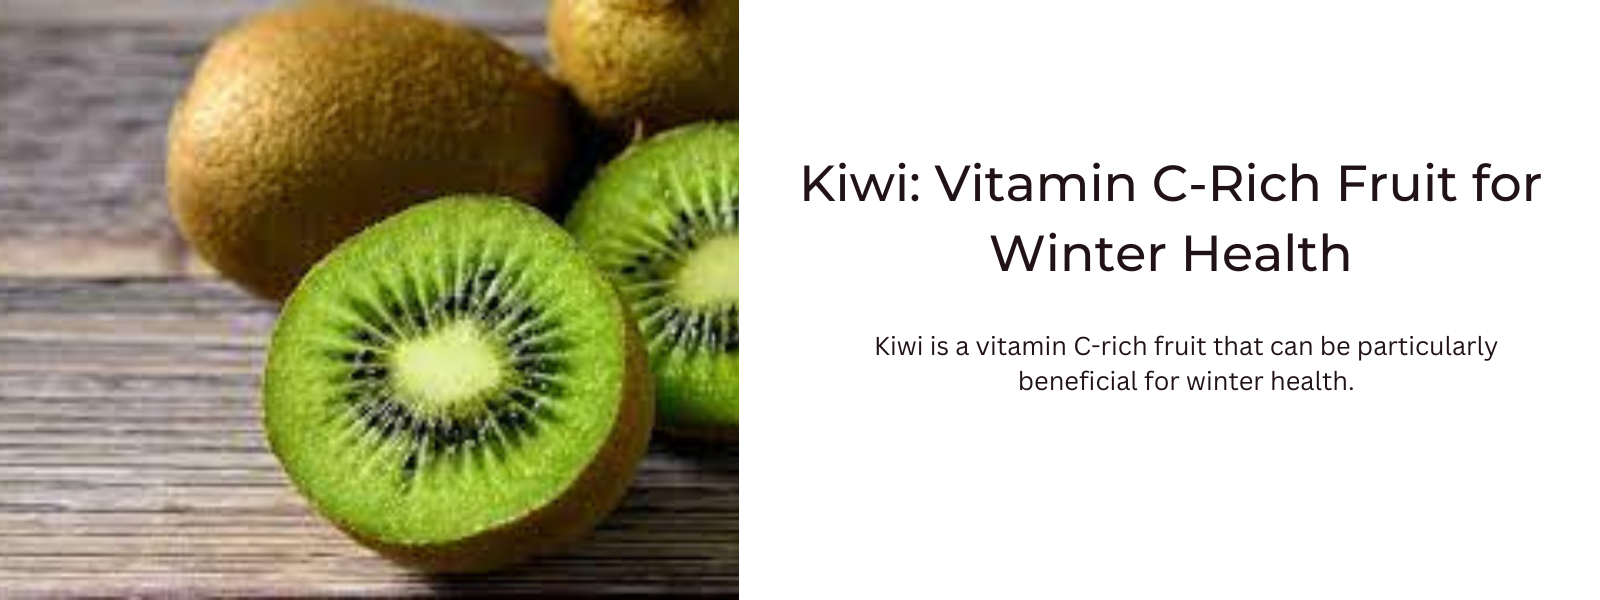 Kiwi: Vitamin C-Rich Fruit for Winter Health